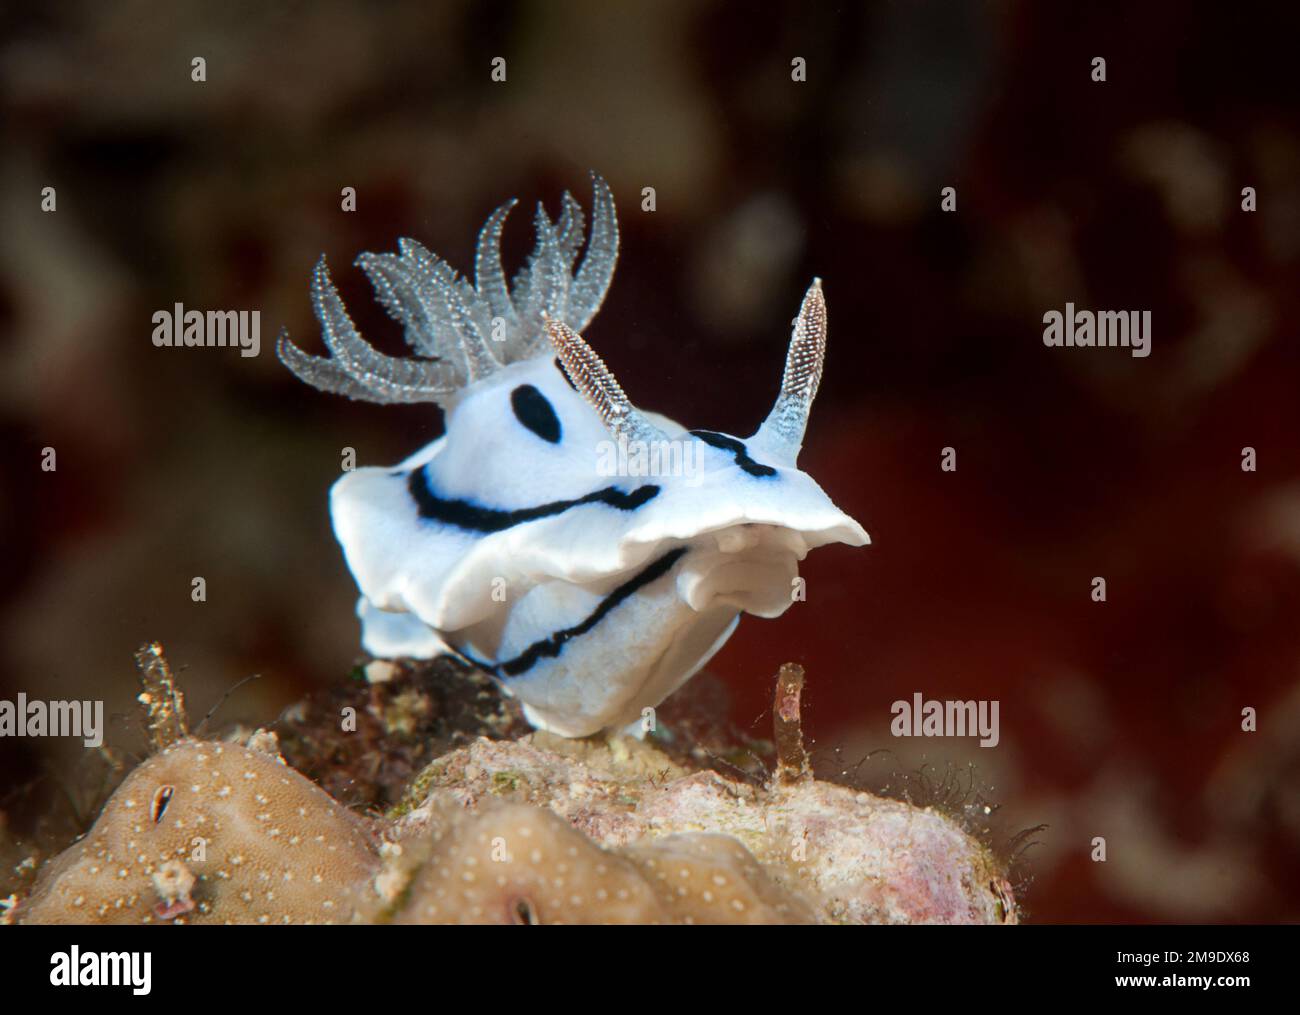 Willan's  chromodoris  nudibranch rests  on coral. Closeup of a of sea slug, a  dorid nudibranch, a shell-less marine gastropod mollusk crawling on co Stock Photo